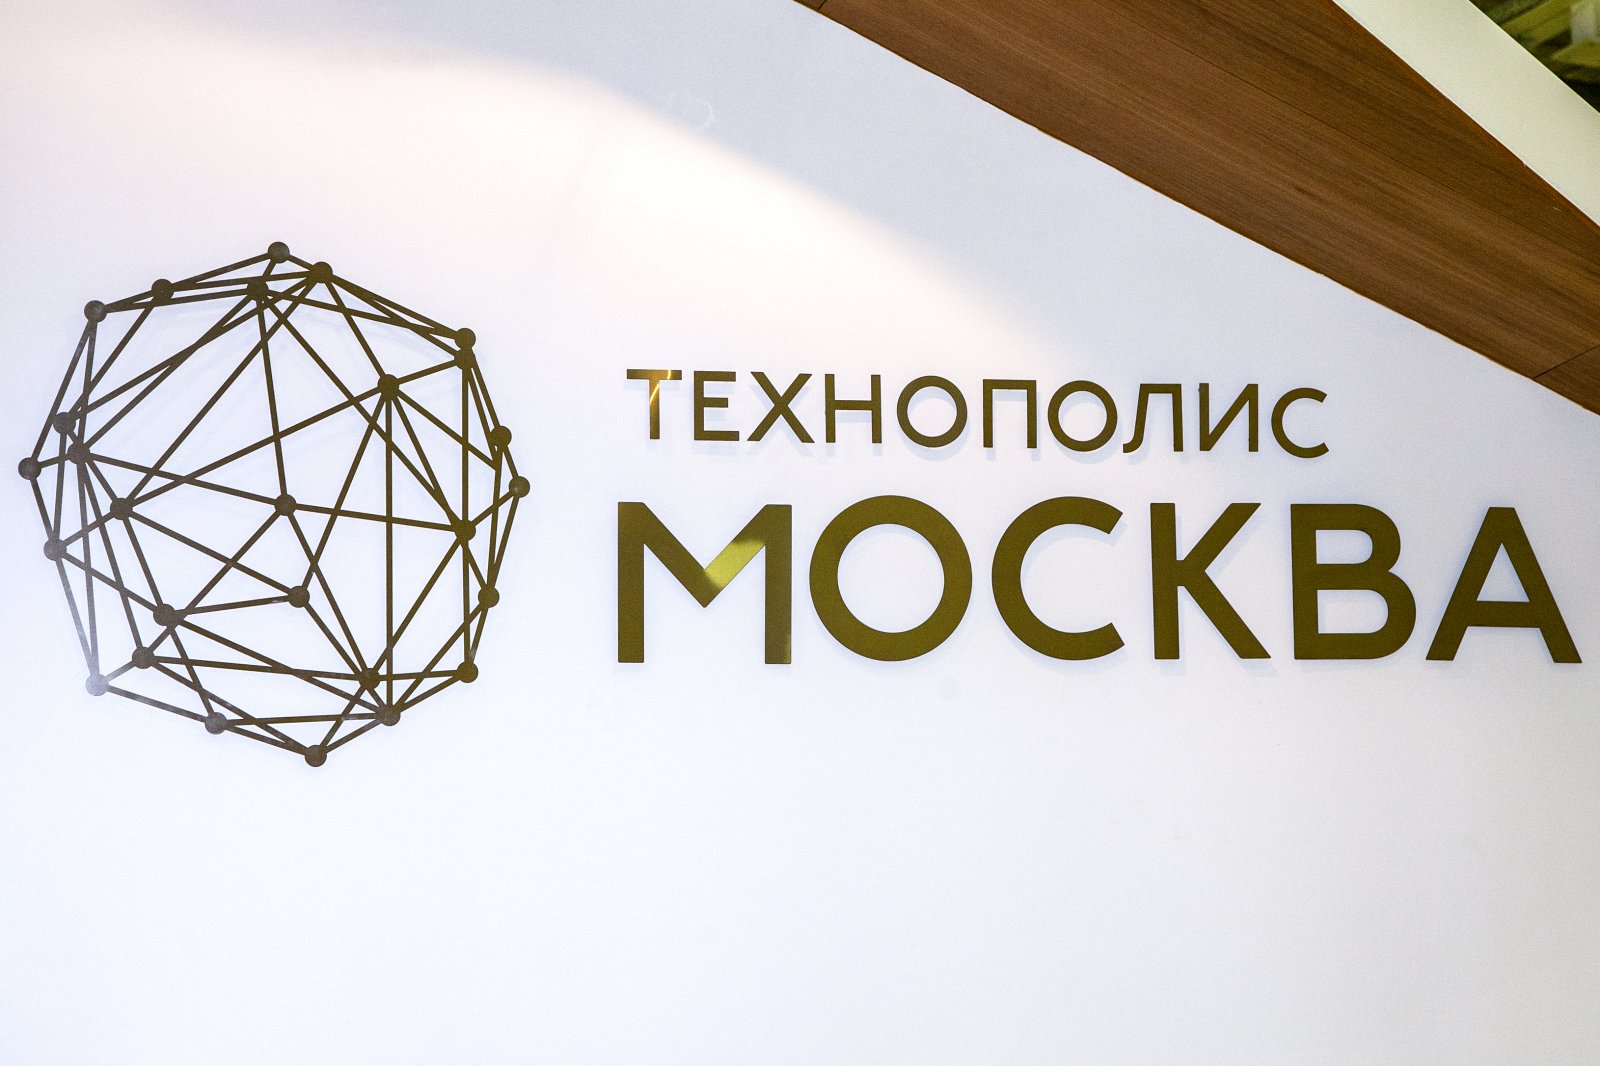 Резидент ОЭЗ «Технополис “Москва”» запустил программу трейд-ин для VPN-шлюзов - фото 1